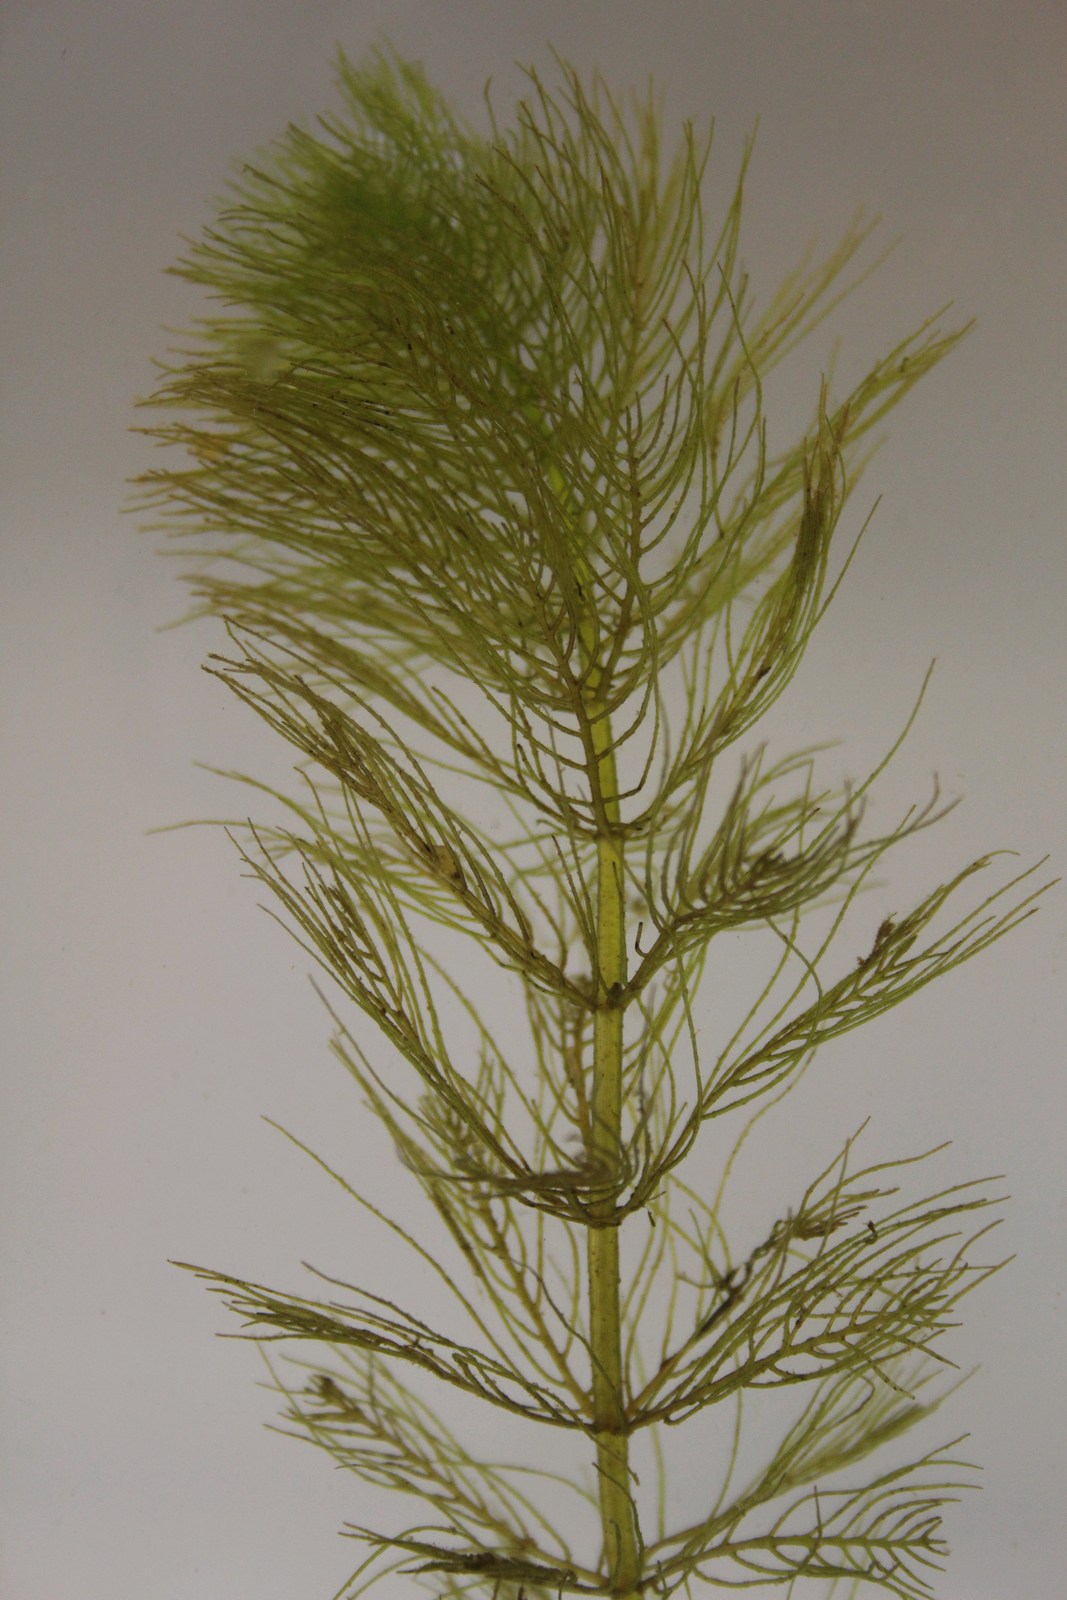 Whorled Water Milfoil (Myriophyllum verticillatum)